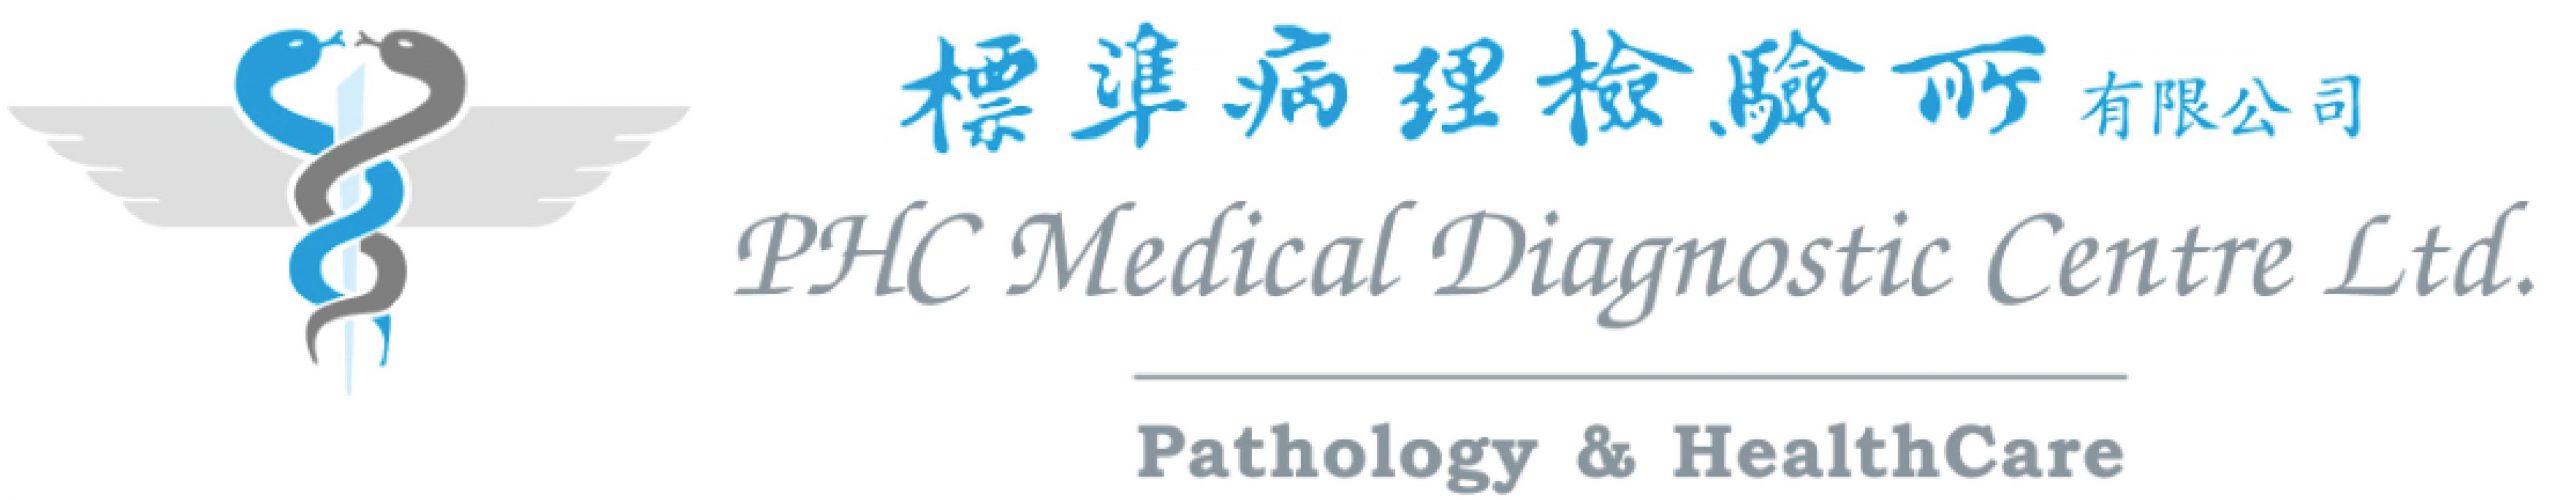 PHC Medical Diagnostic Centre Ltd.